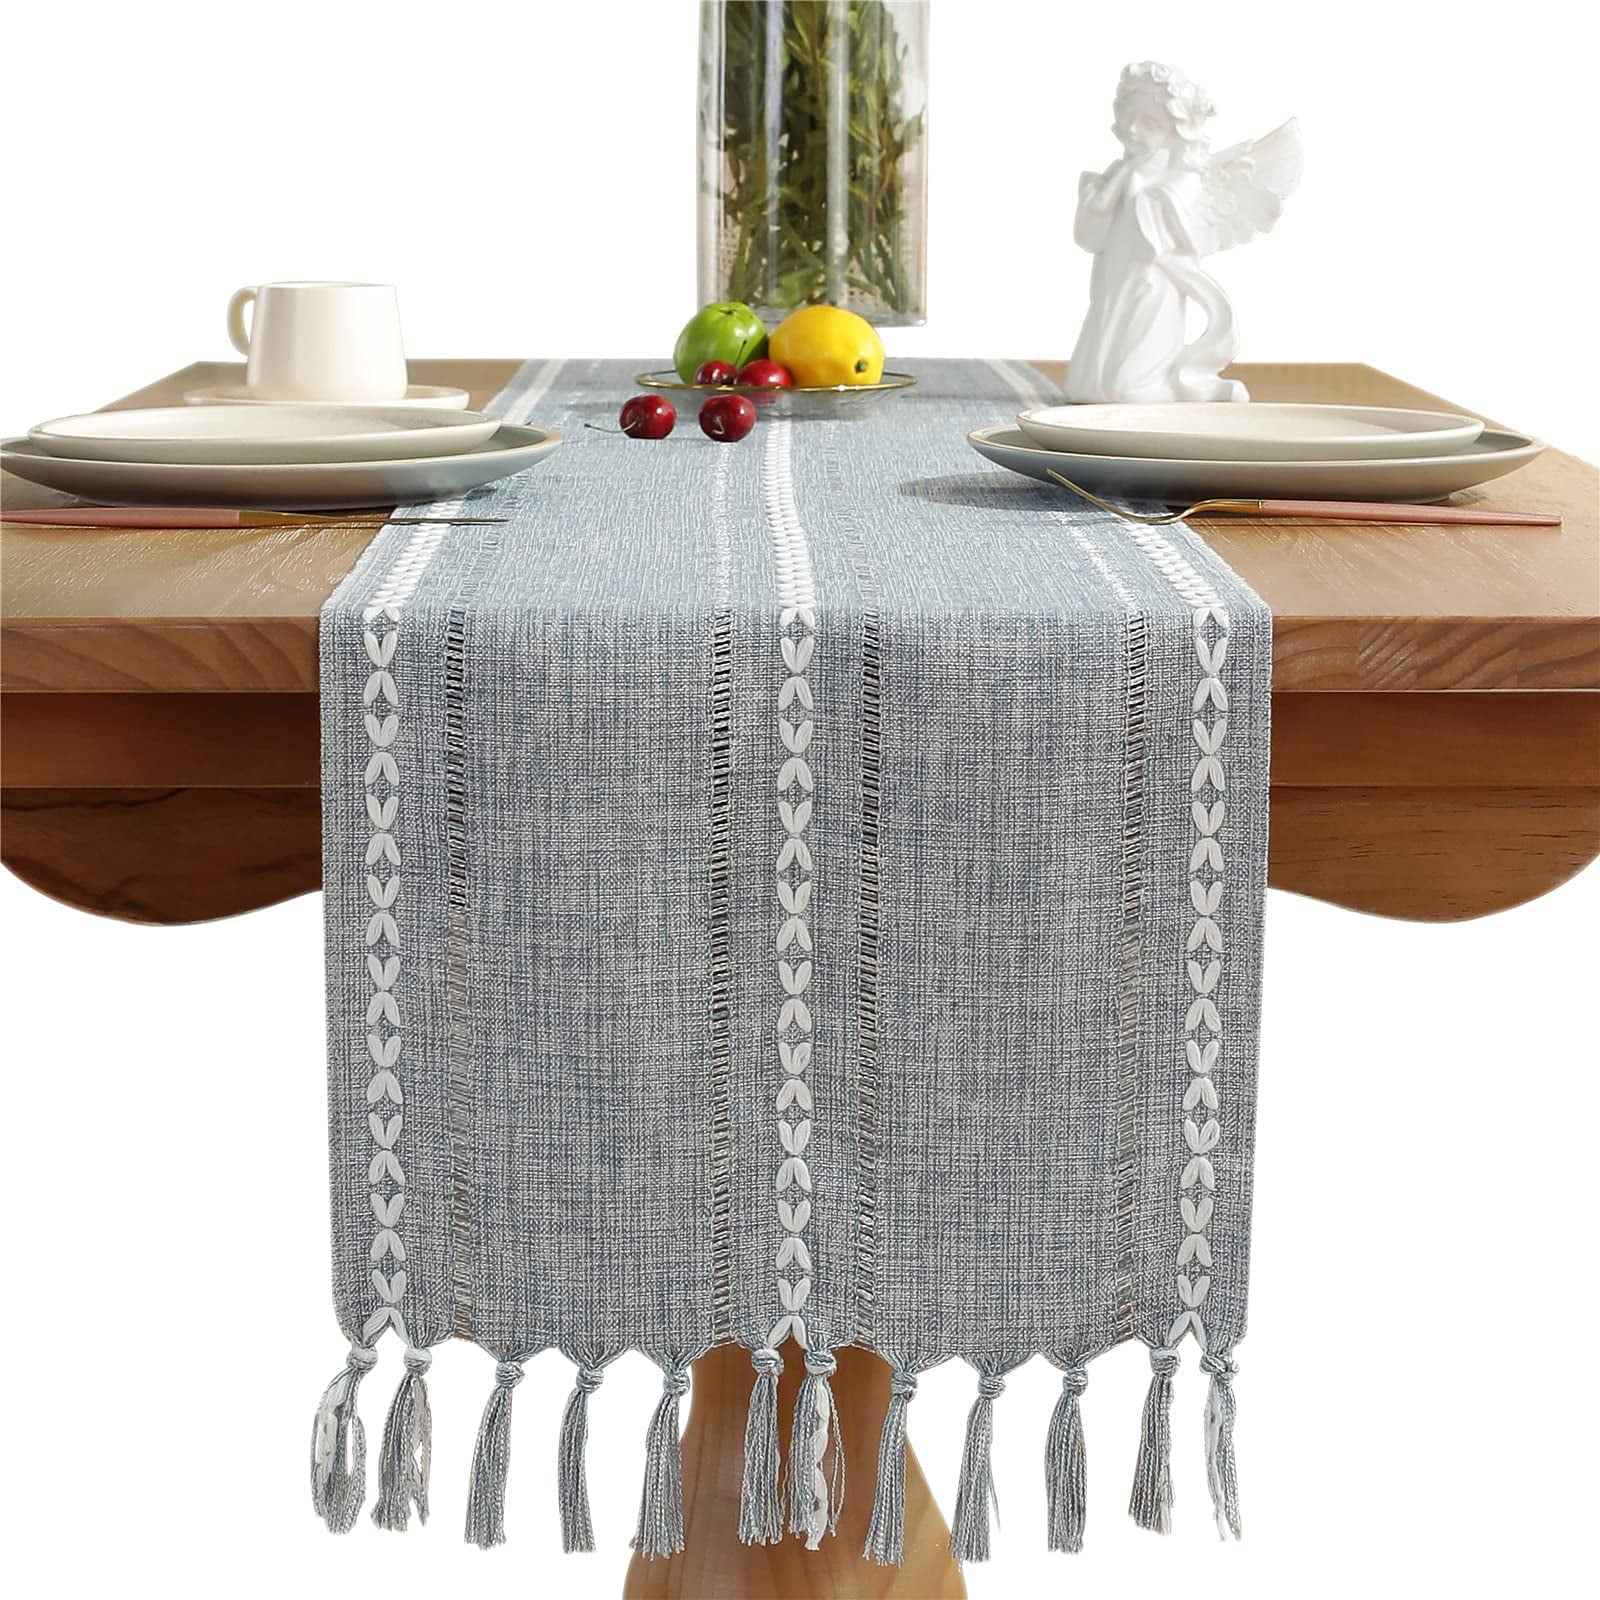 Ethnic Table Runner Boho Tasseled Edges Tablecloth Cotton Linen Table Cover 